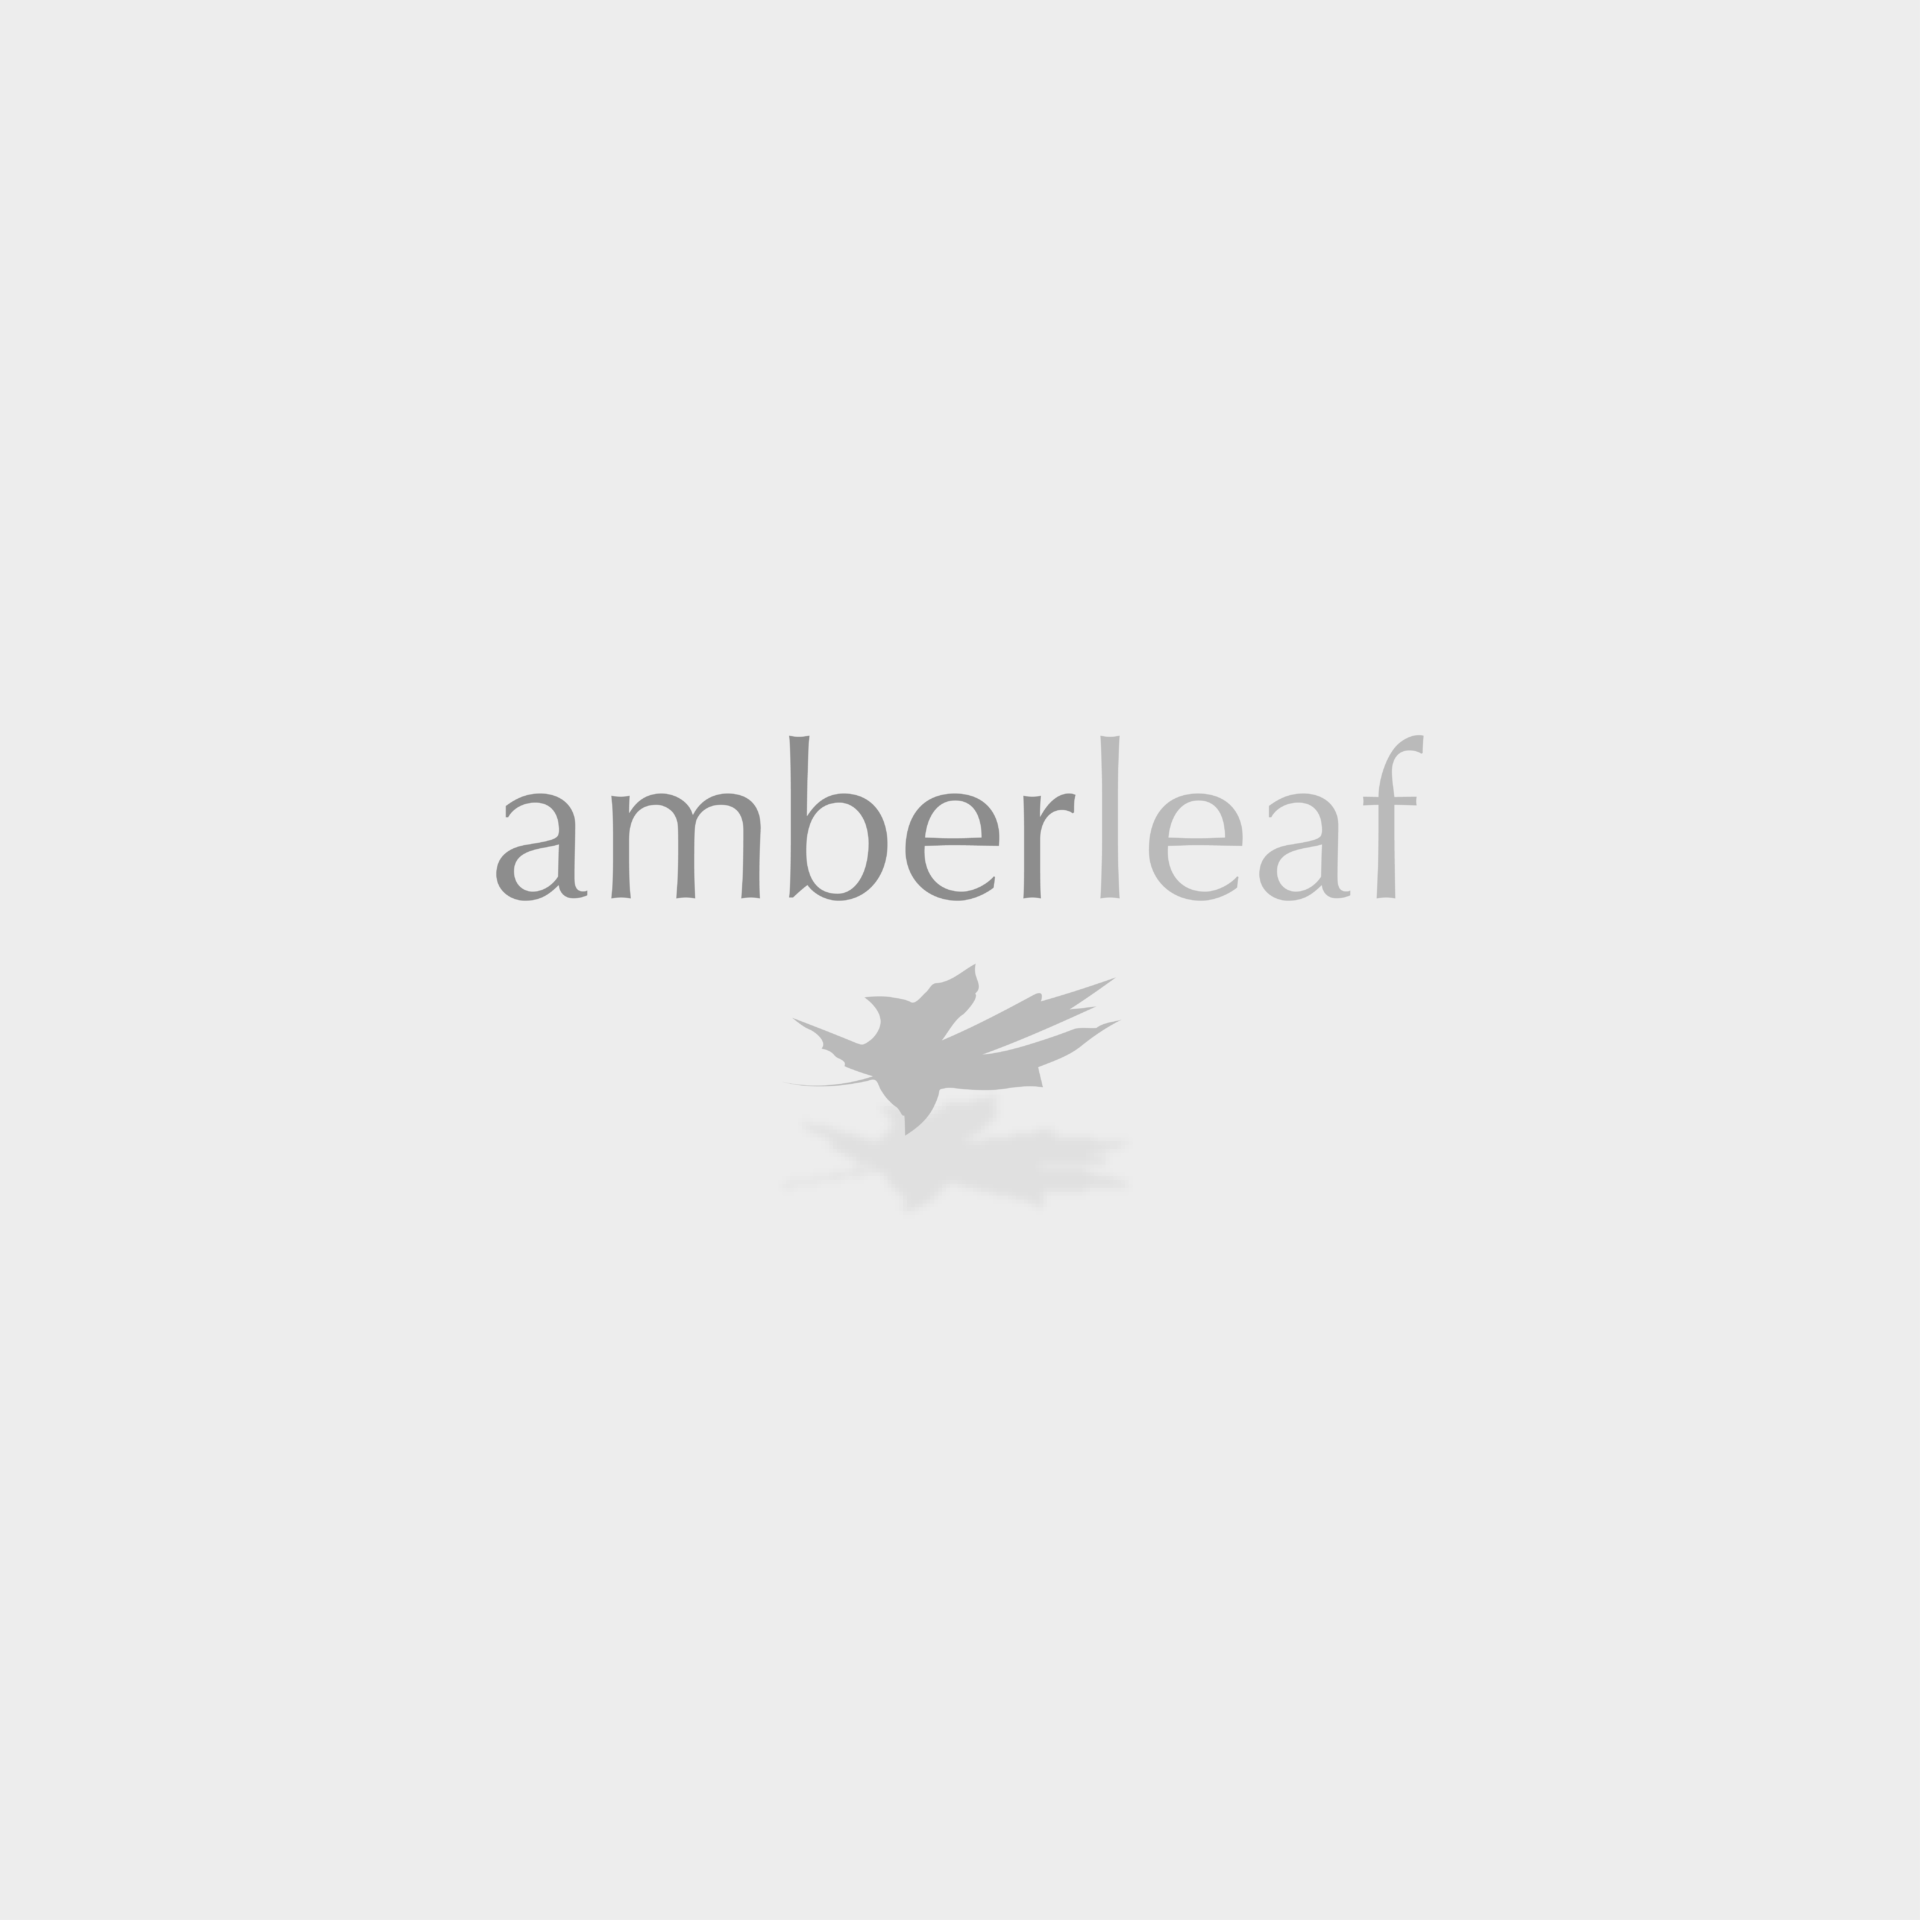 amberleaf logo bw